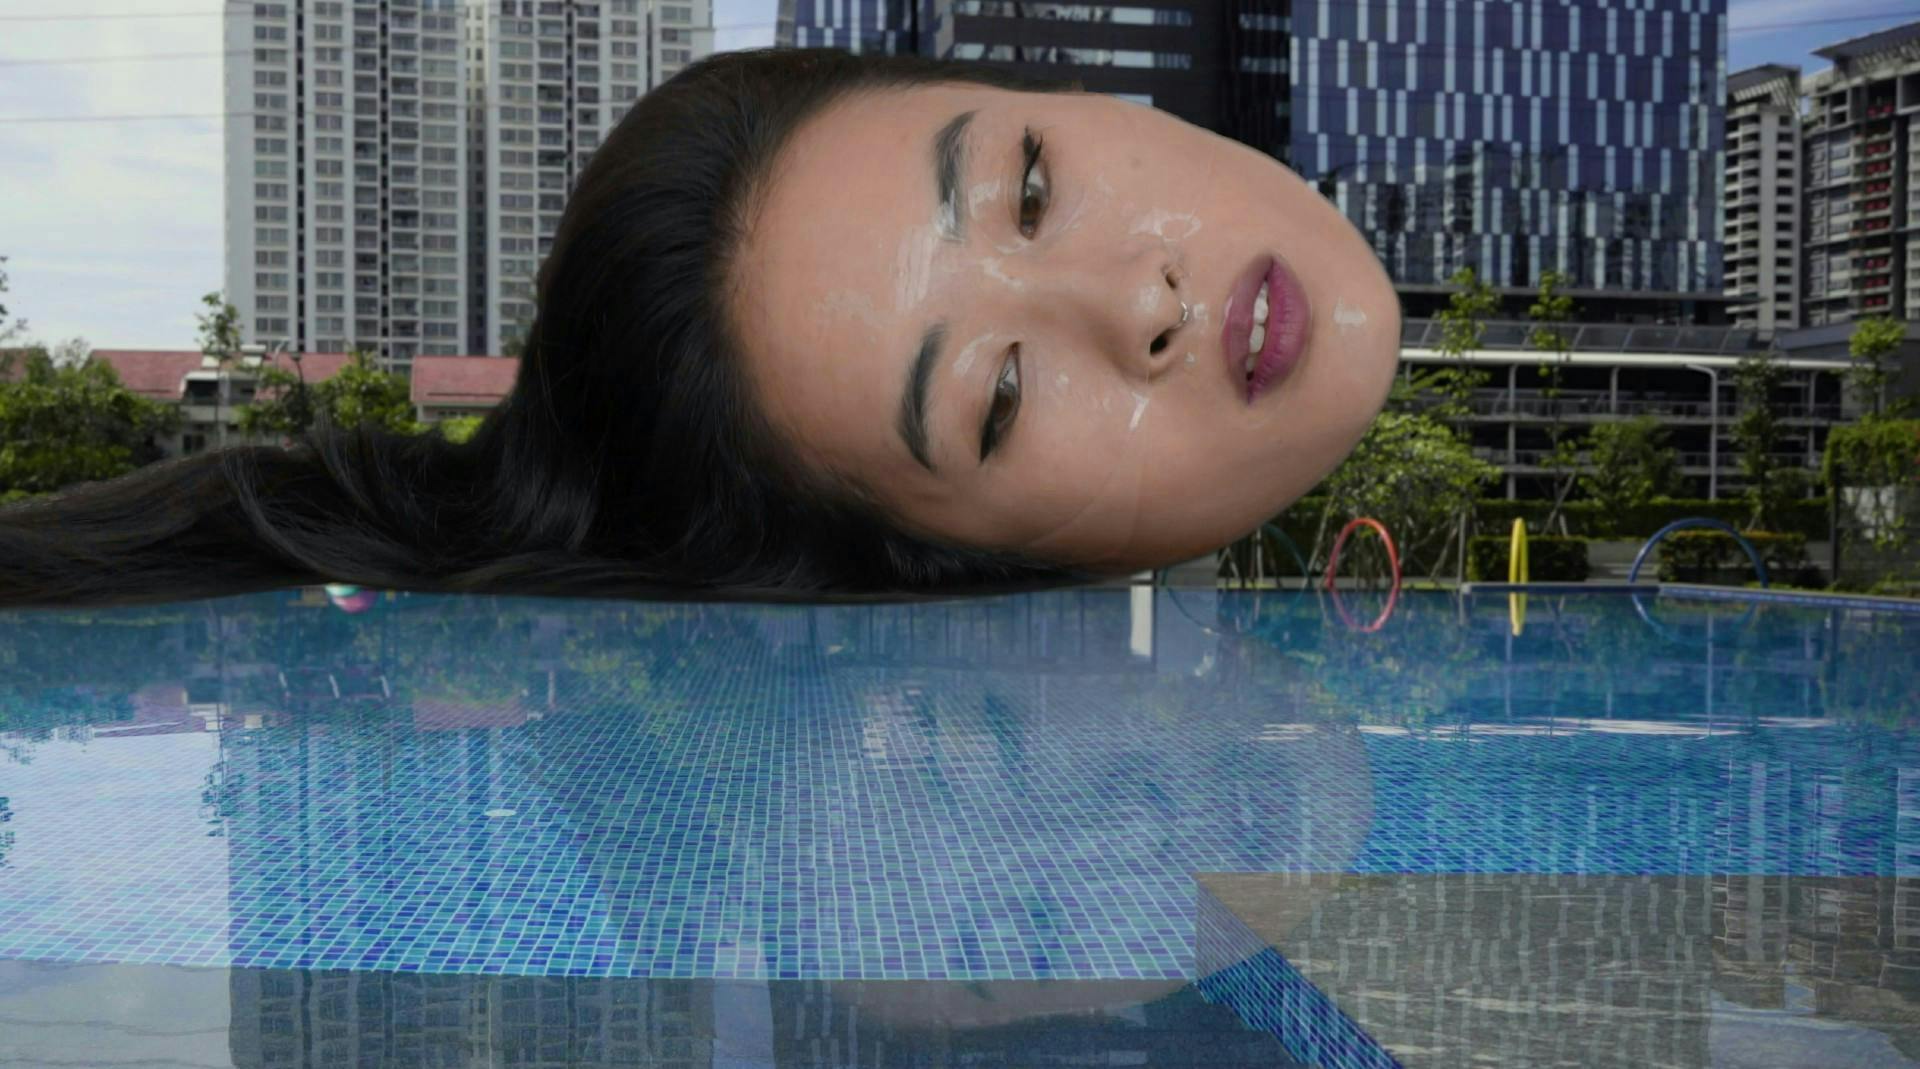 pool water city swimming pool hotel metropolis portrait person woman adult